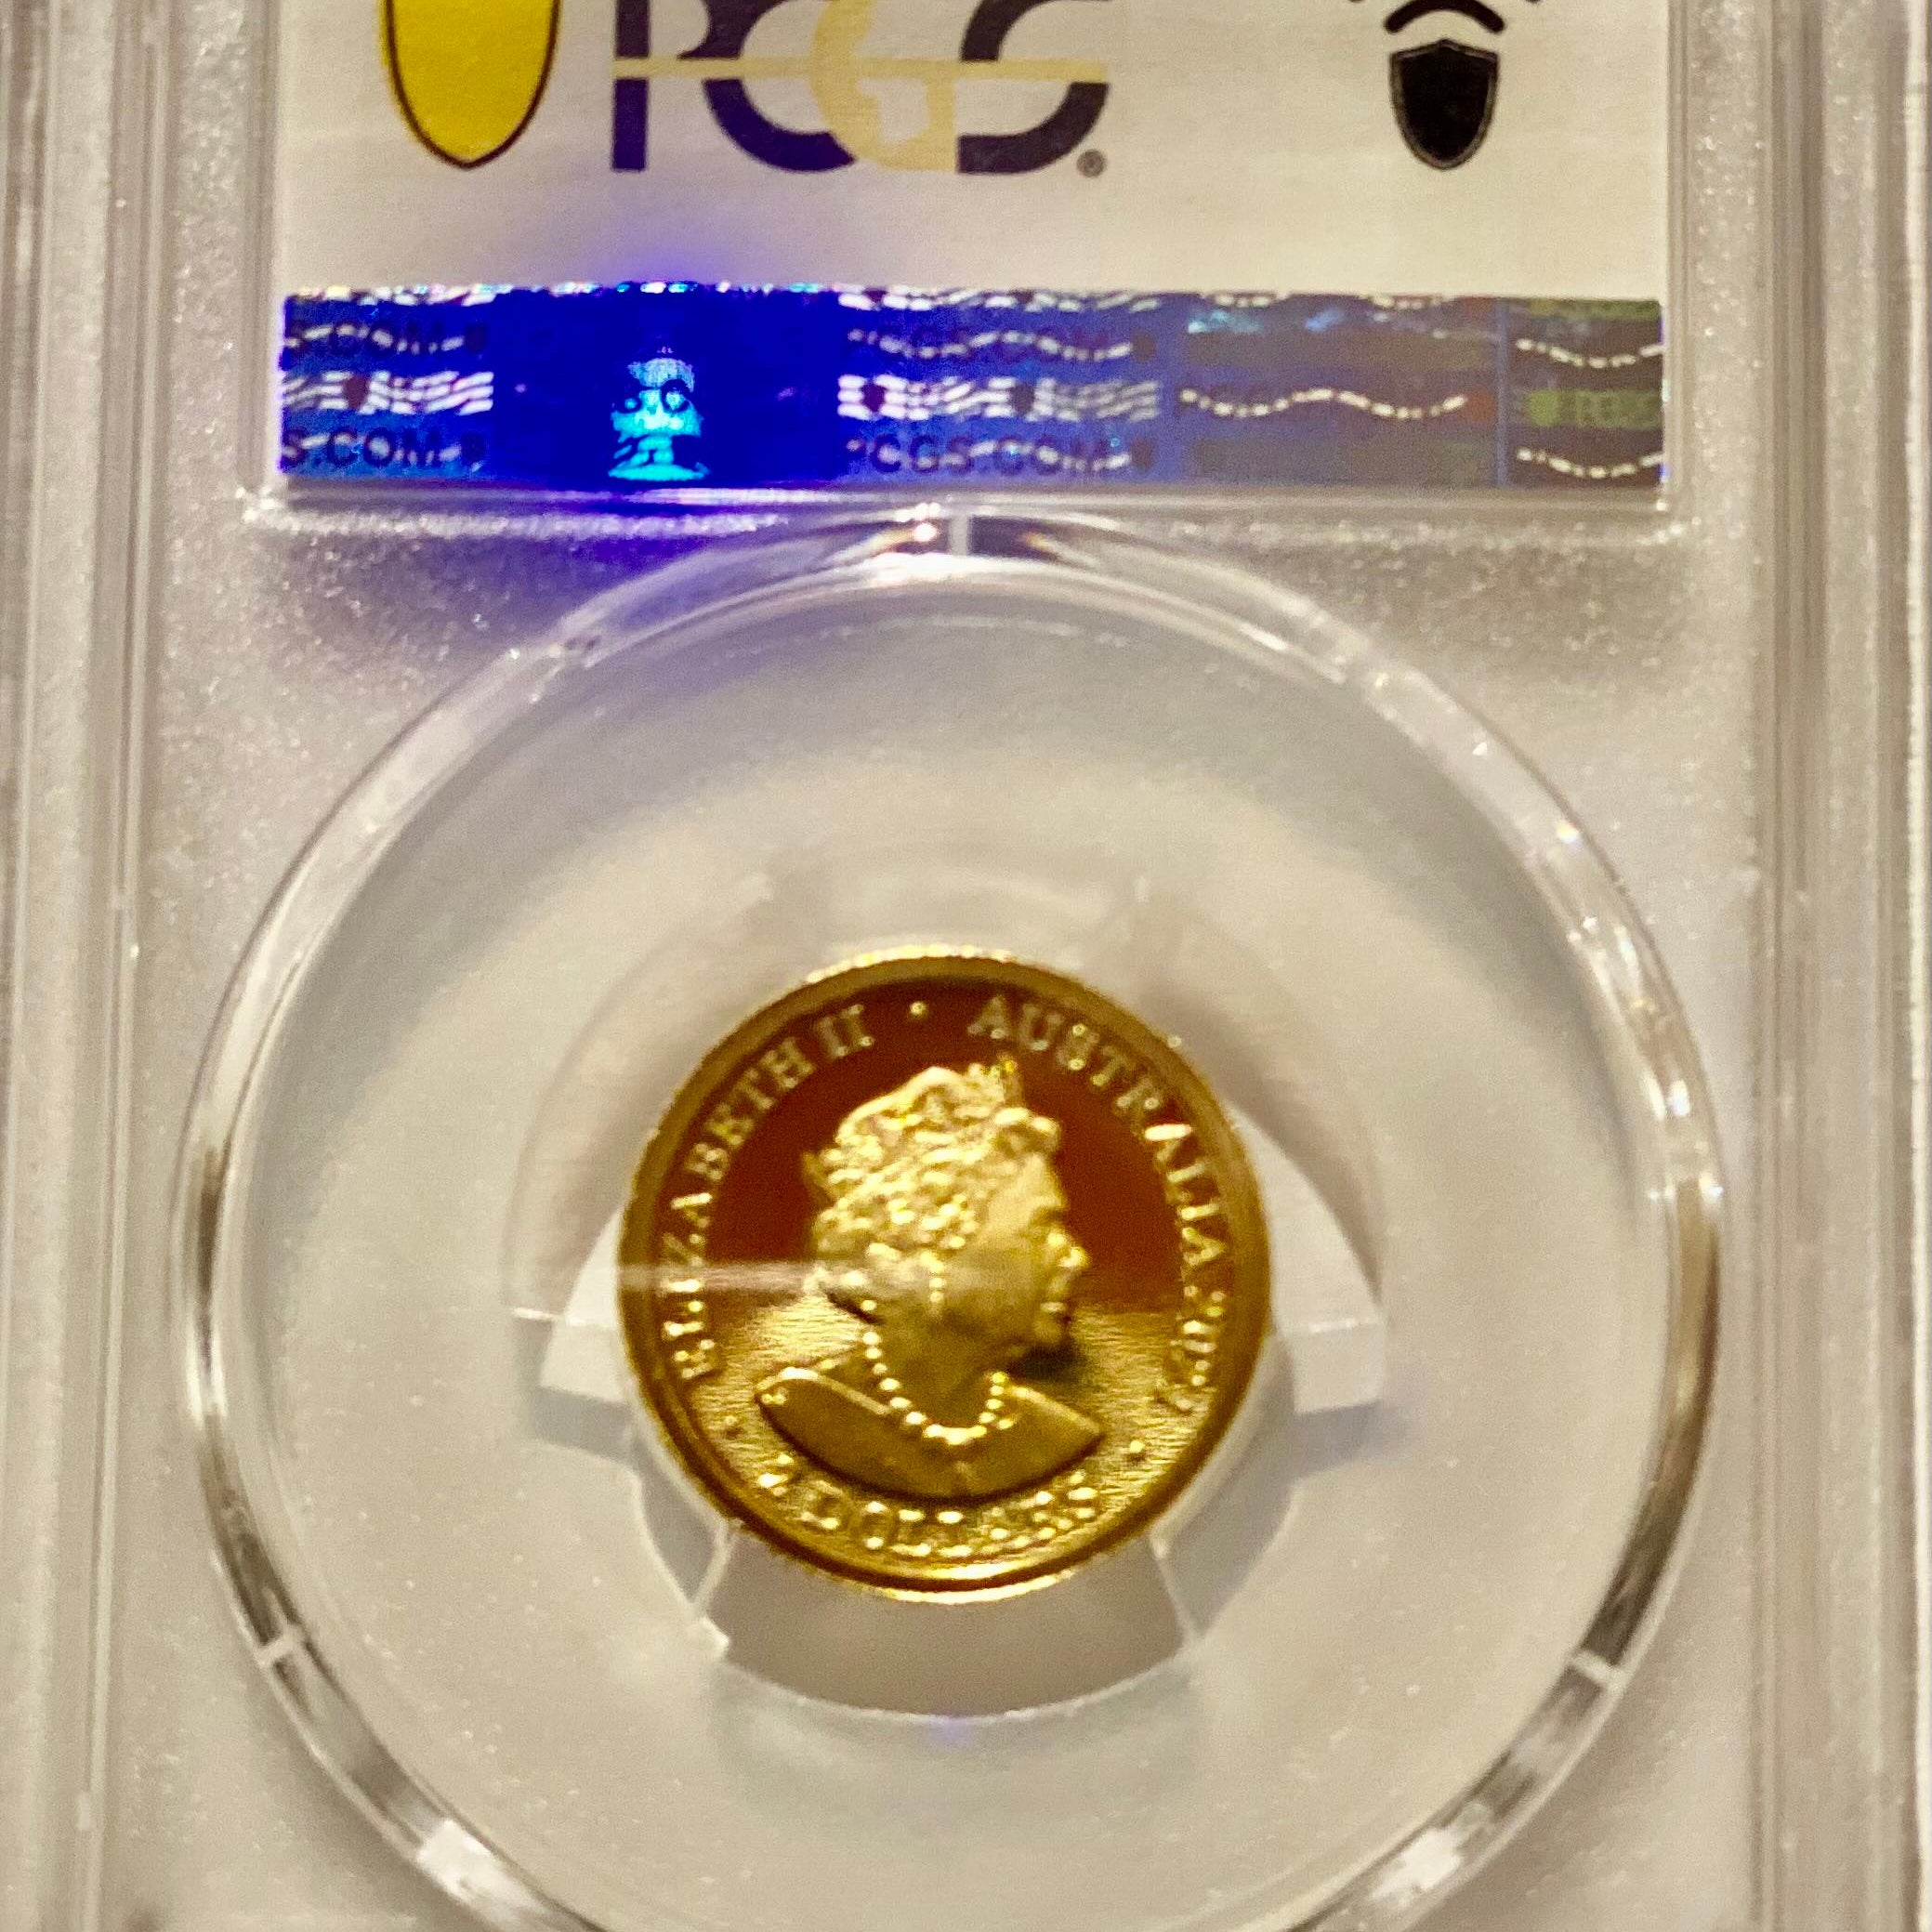 Royal Australian Mint 2021 Aboriginal Flag $2 Coin - PCGS MS66